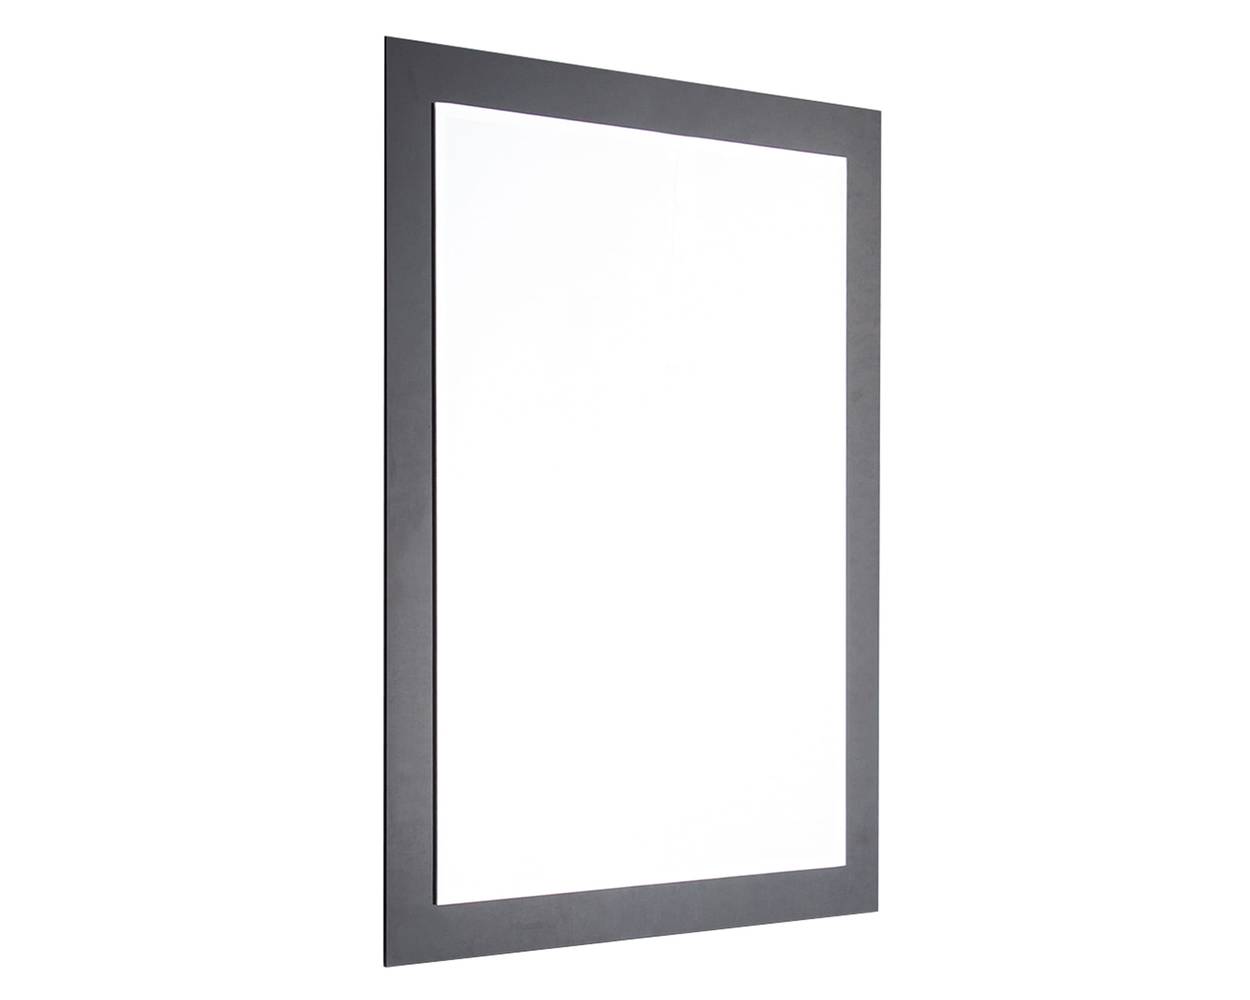 Vessanti espejo marco negro con bisel (80 x 60 cm)